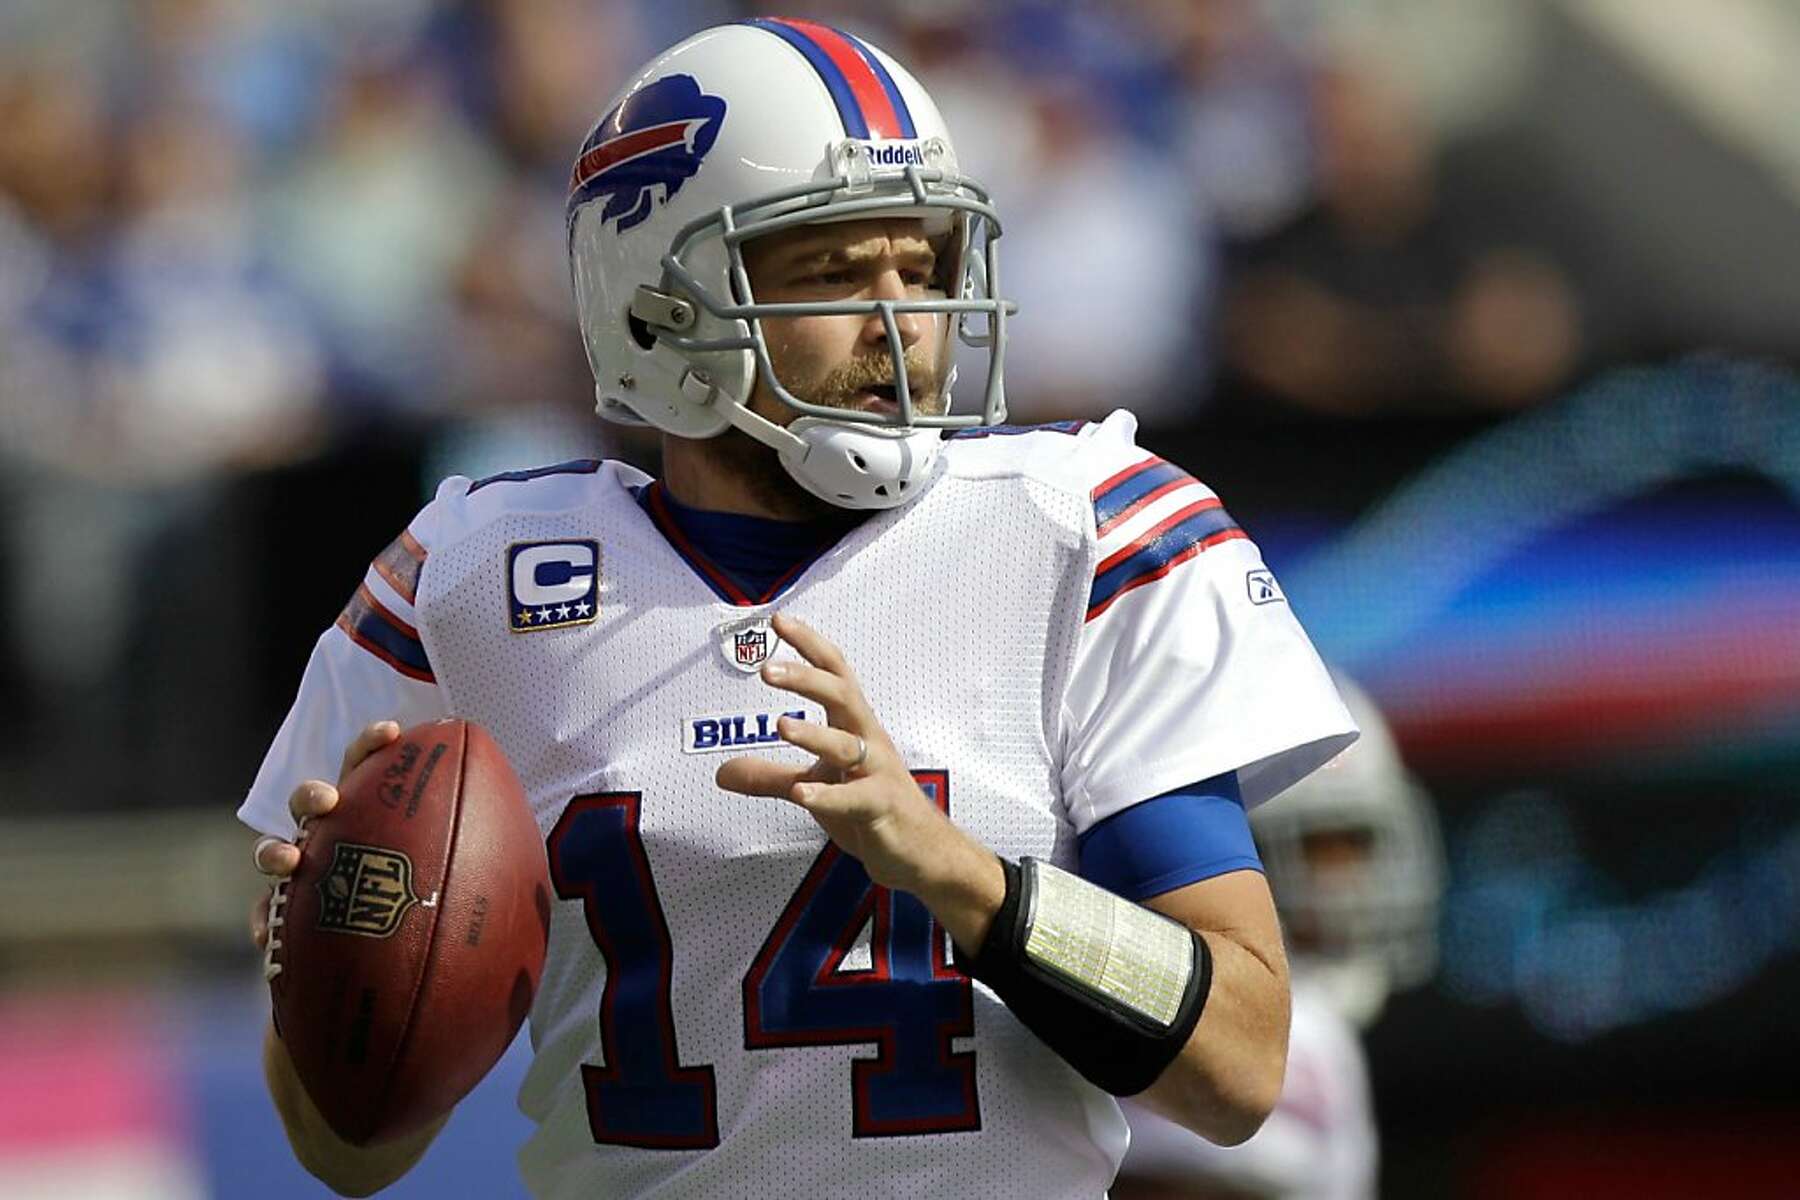 2011 NFL Pro Bowl: Is Ryan Fitzpatrick Worthy? - Buffalo Rumblings